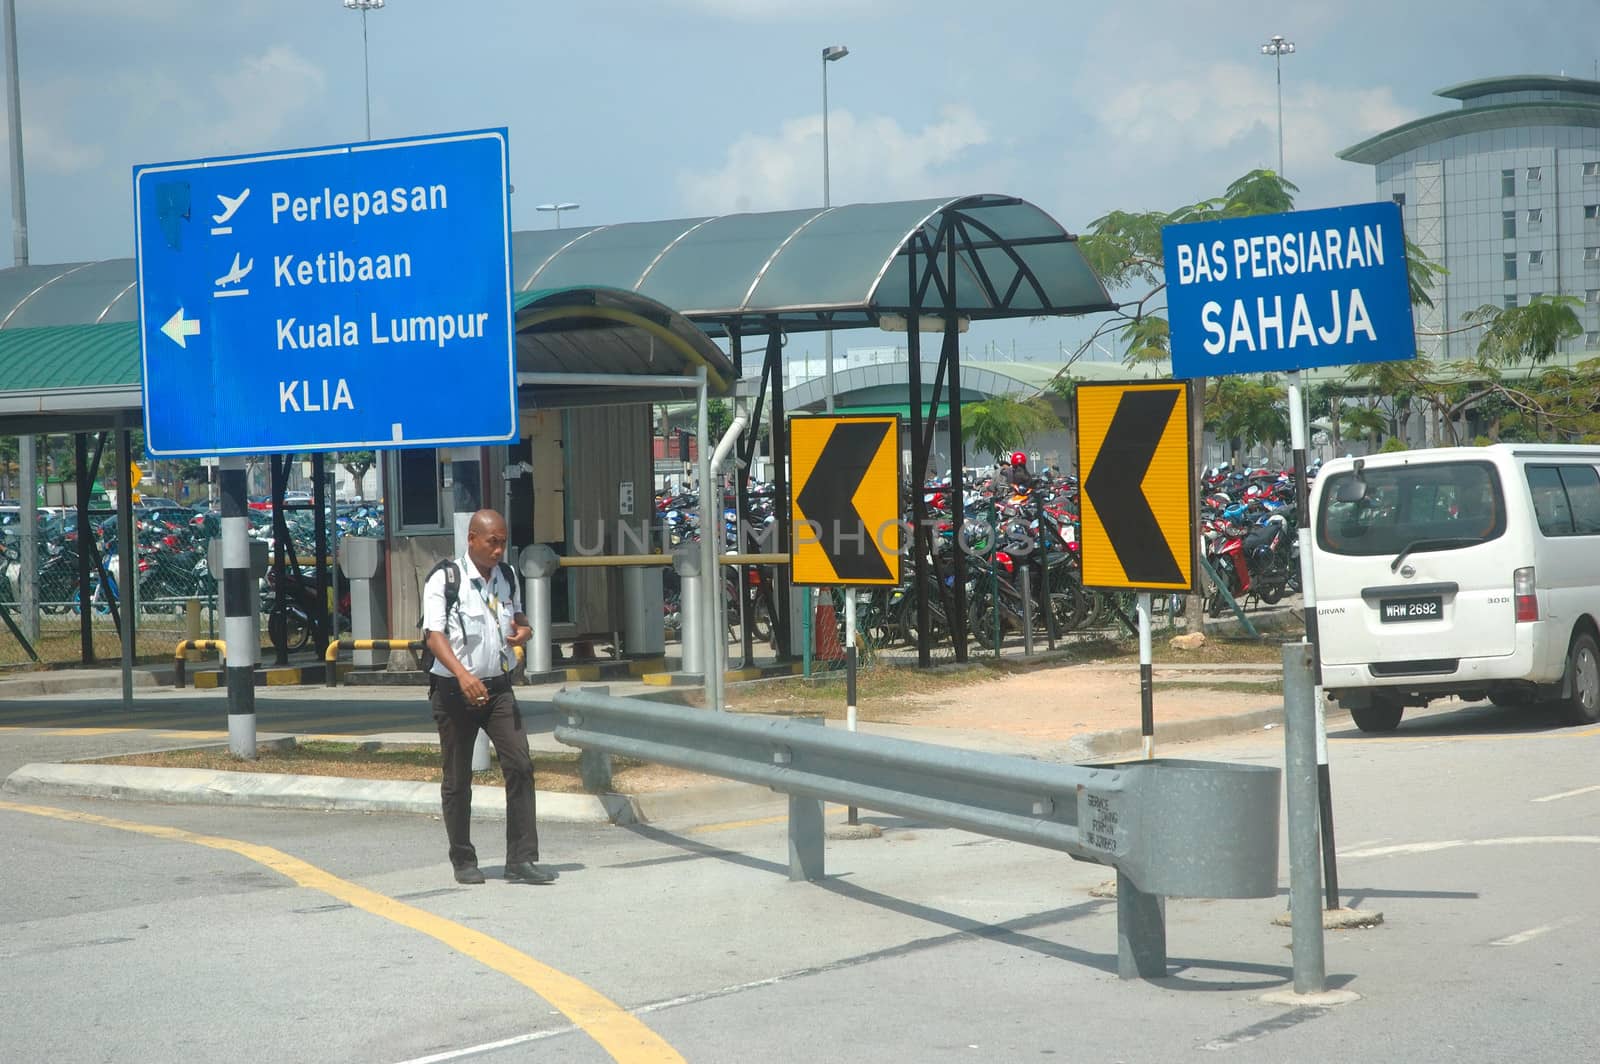 Kuala Lumpur Low Cost Carrier Terminal by bluemarine